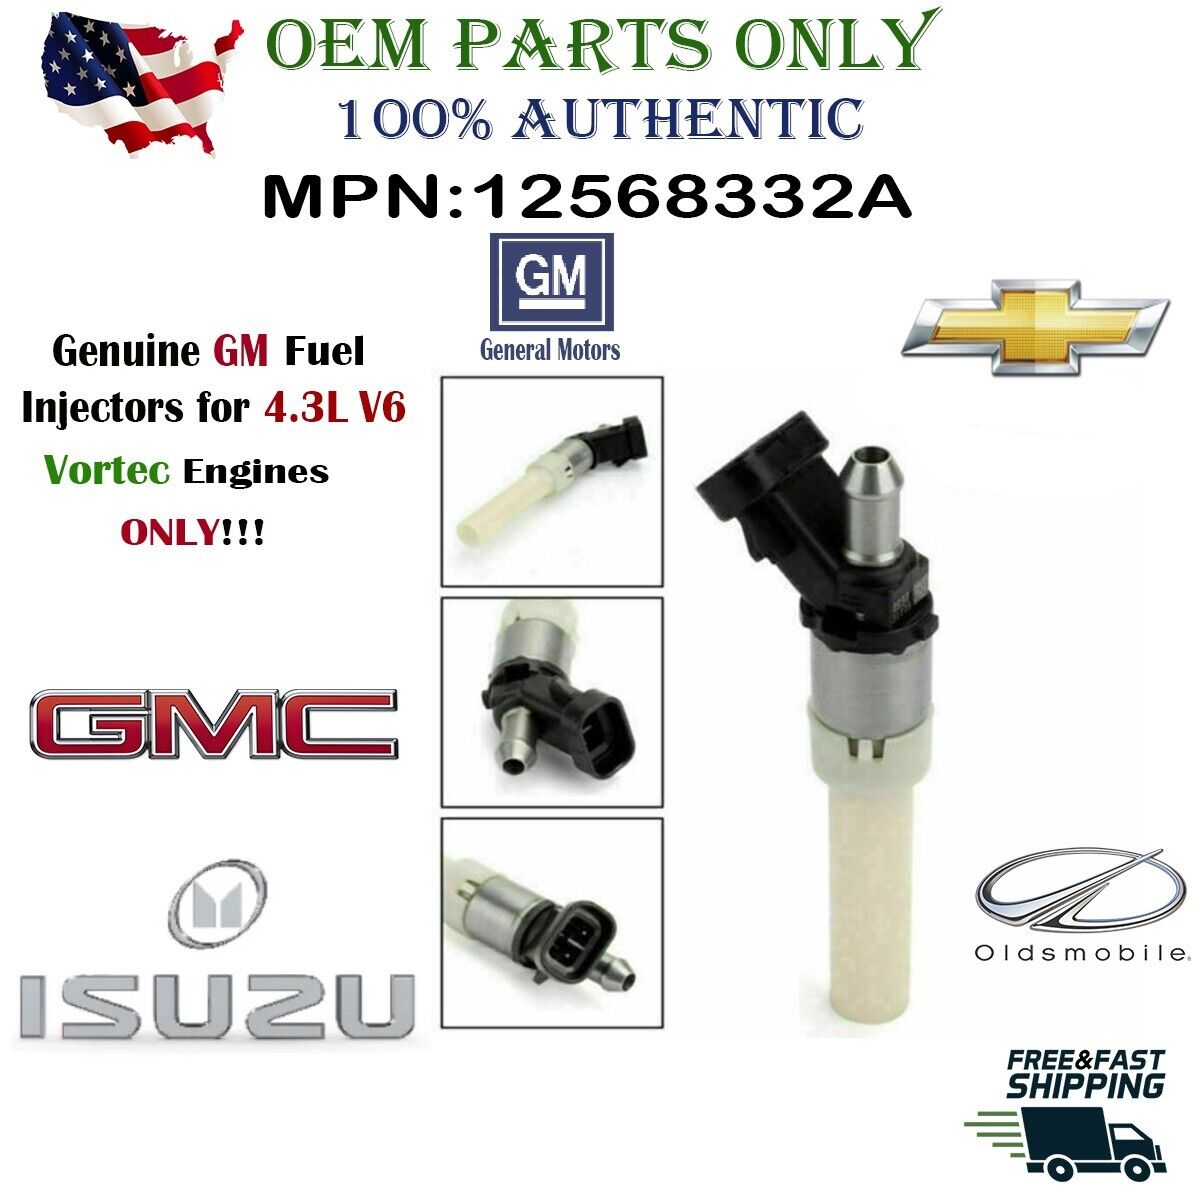 OEM GM Spider 1PC Fuel Injector for 1996-2014 GMC, Chevy, Isuzu 4.3L V6 Vortec